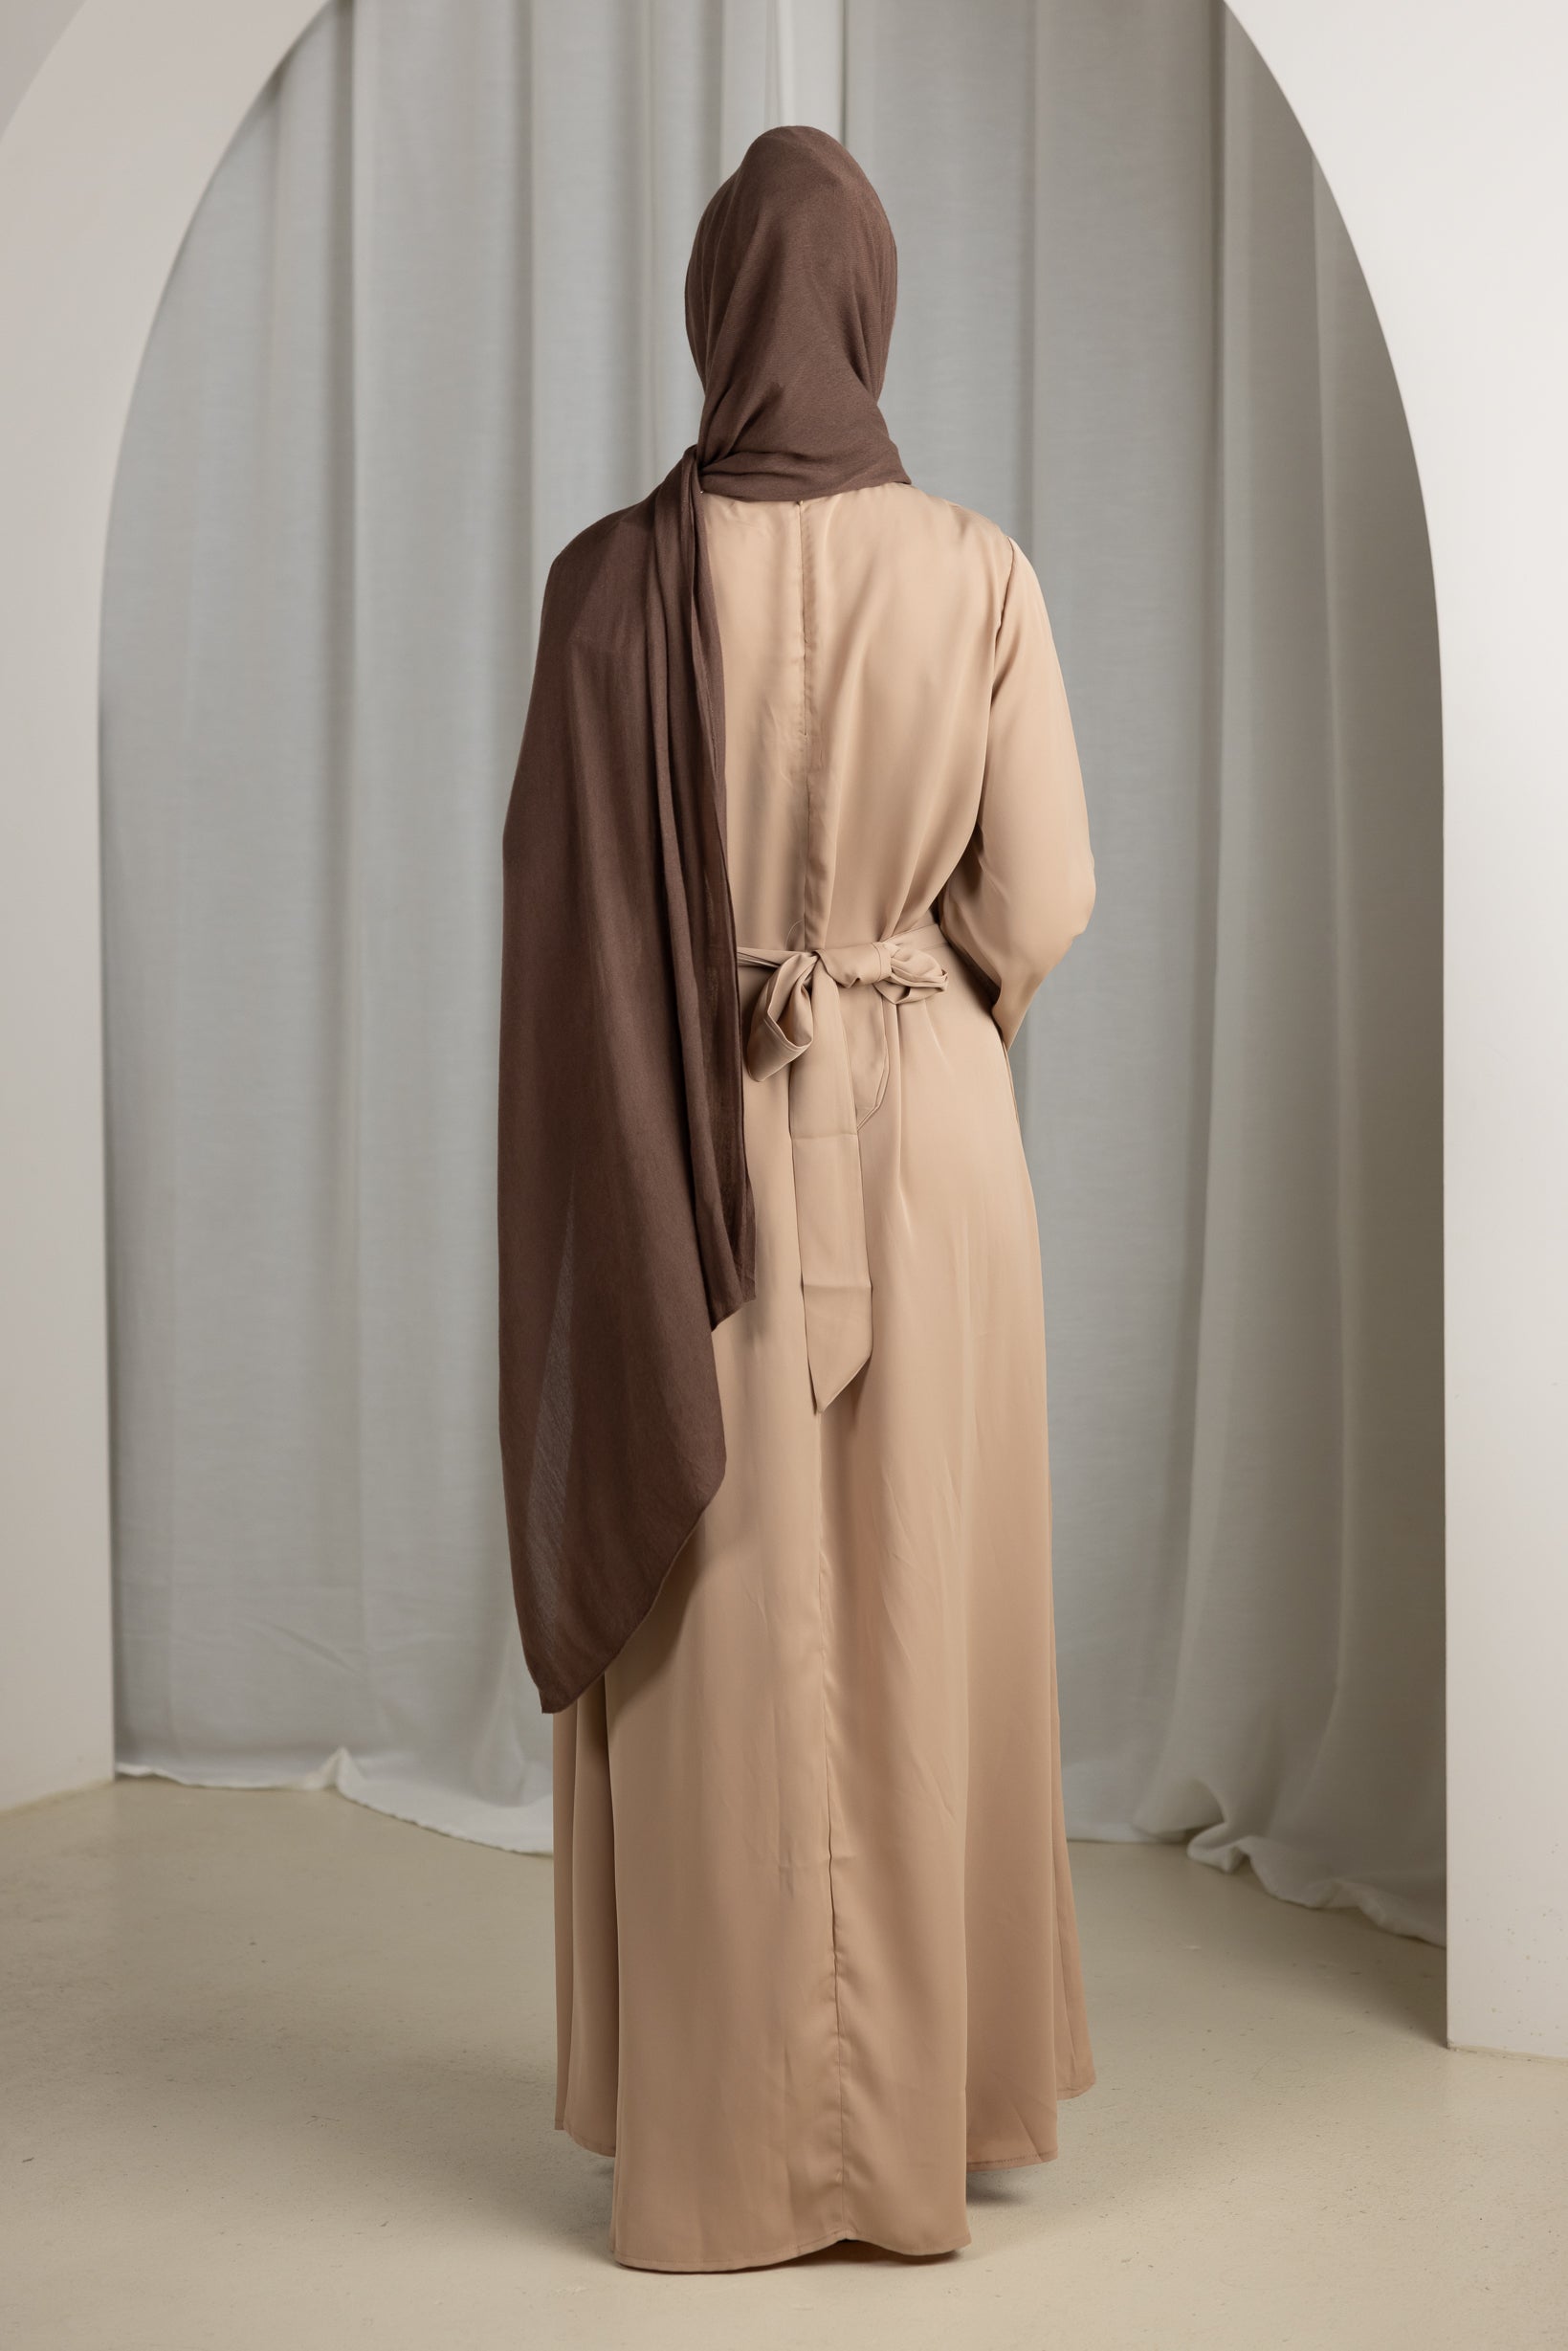 M7635LightMocha-abaya-dress